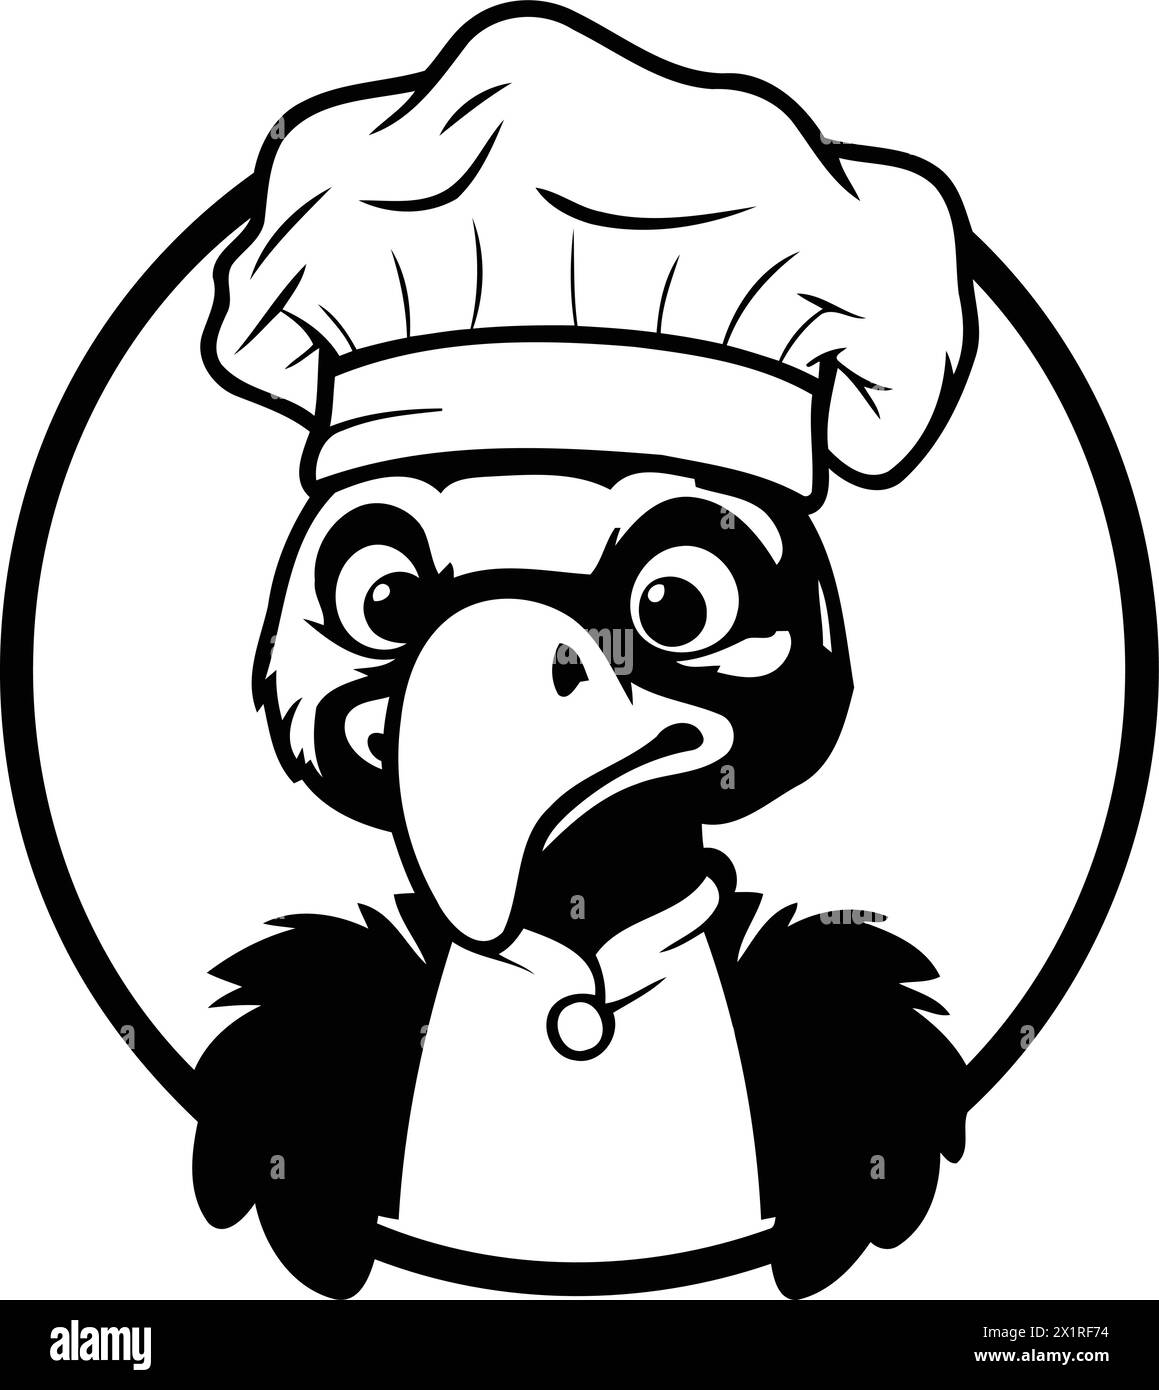 Cute cartoon penguin in chef hat and chef uniform. Vector illustration. Stock Vector